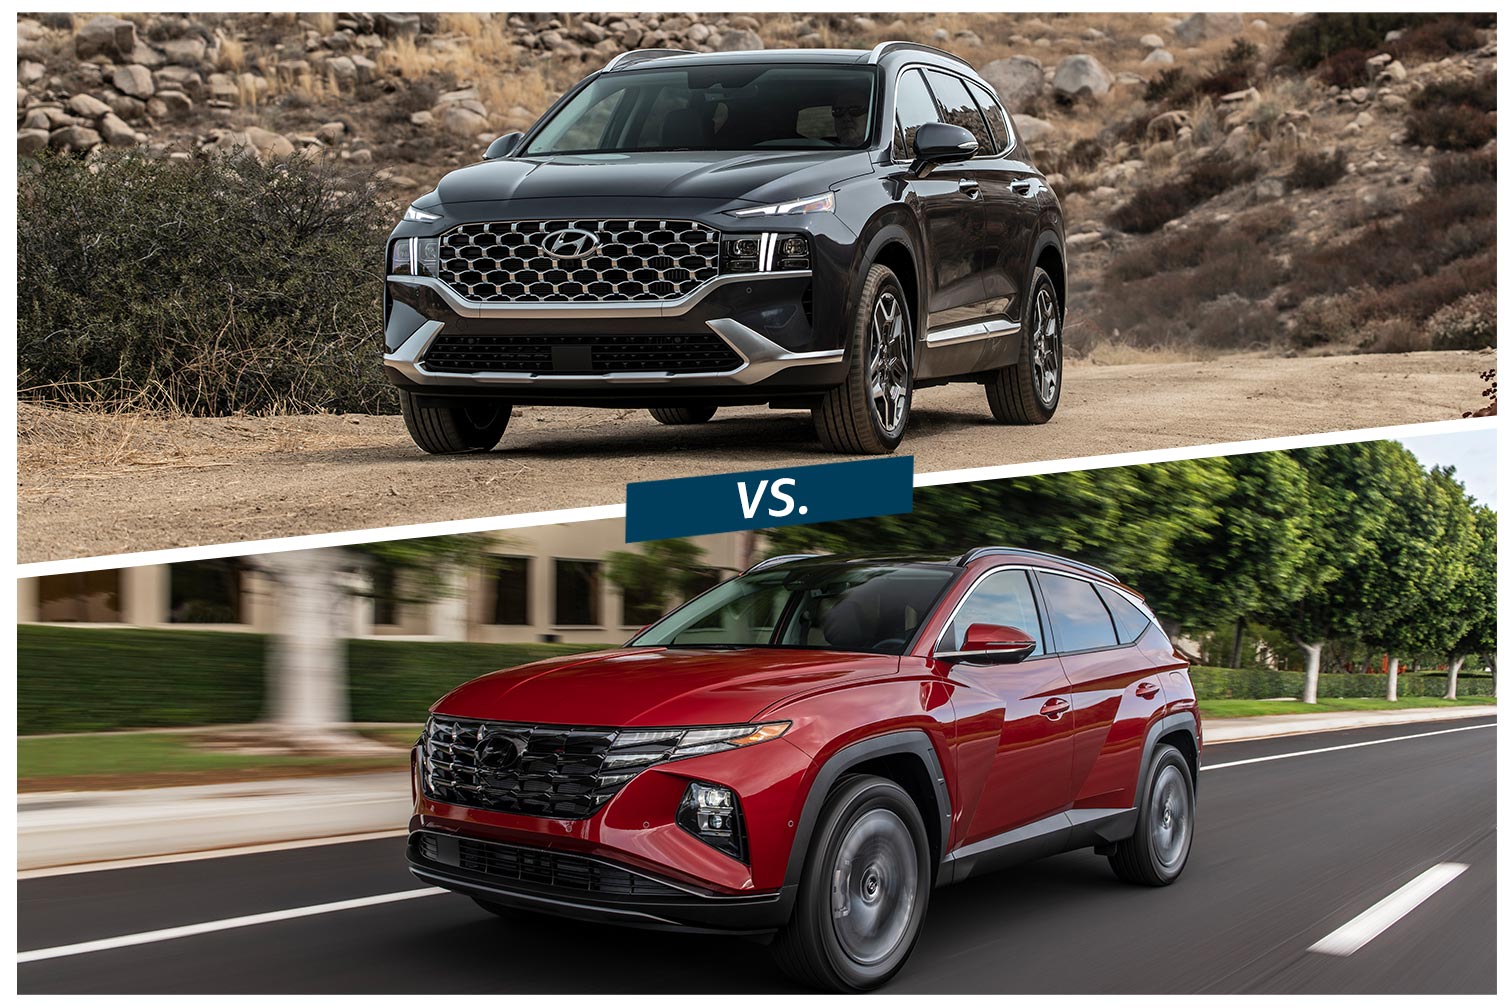 Hyundai Tucson vs Santa Fe: What's the Difference?